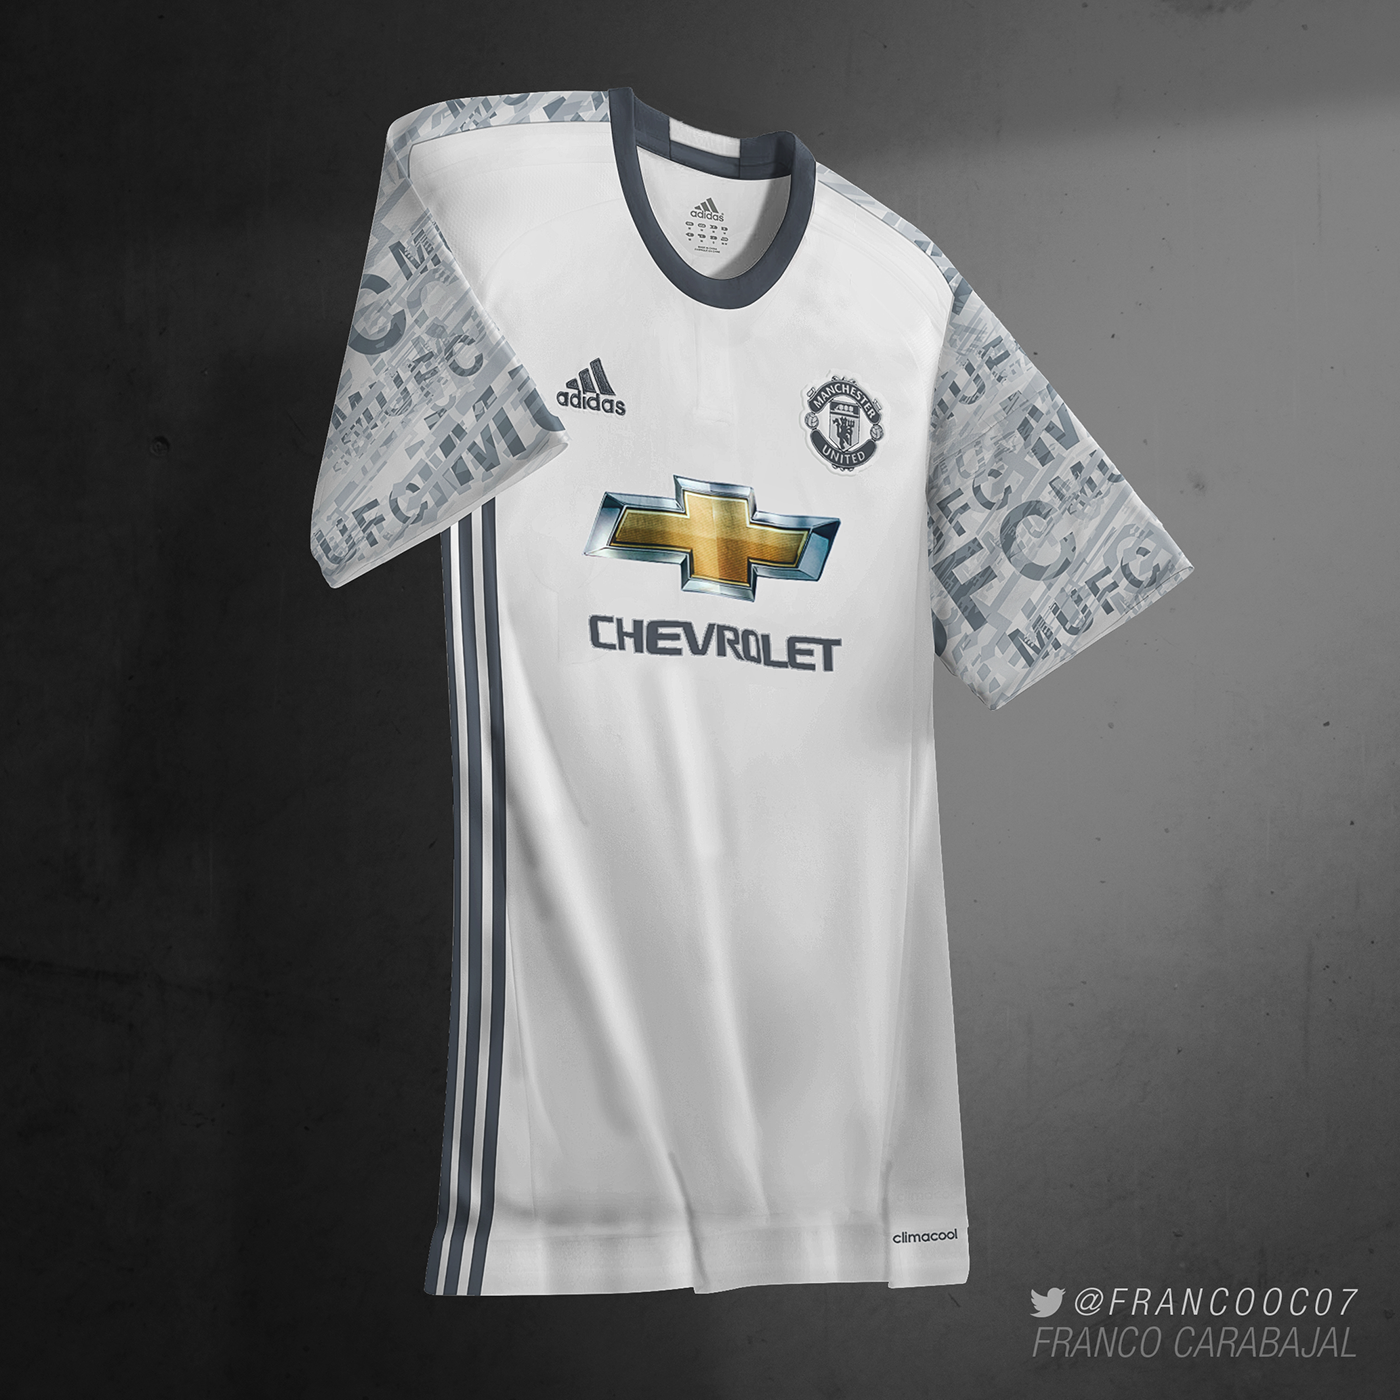 adidas Adidas Kit jersey camisetas Futbol football football kits Real Madrid Chelsea Juventus bayern munich